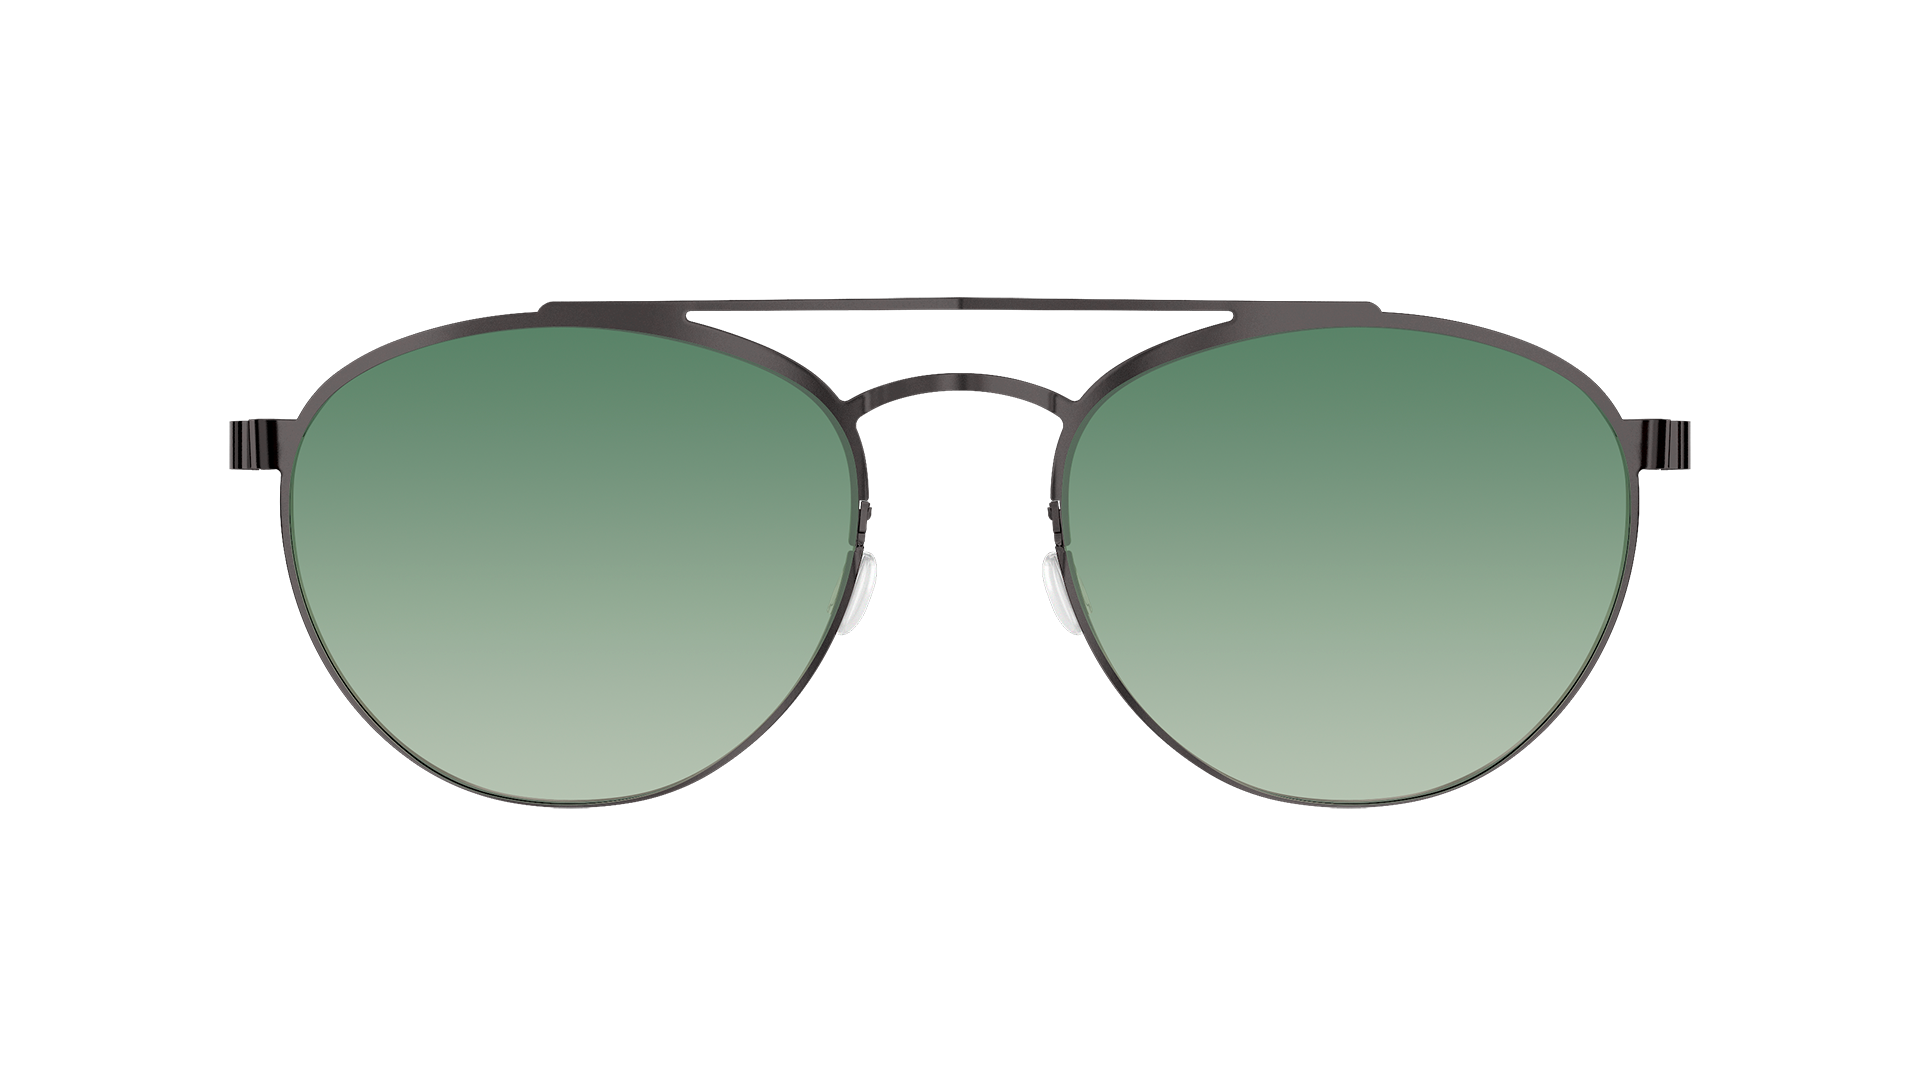 LINDBERG sun titanium Model 8582 modern double bar round sunglasses with green tinted lenses